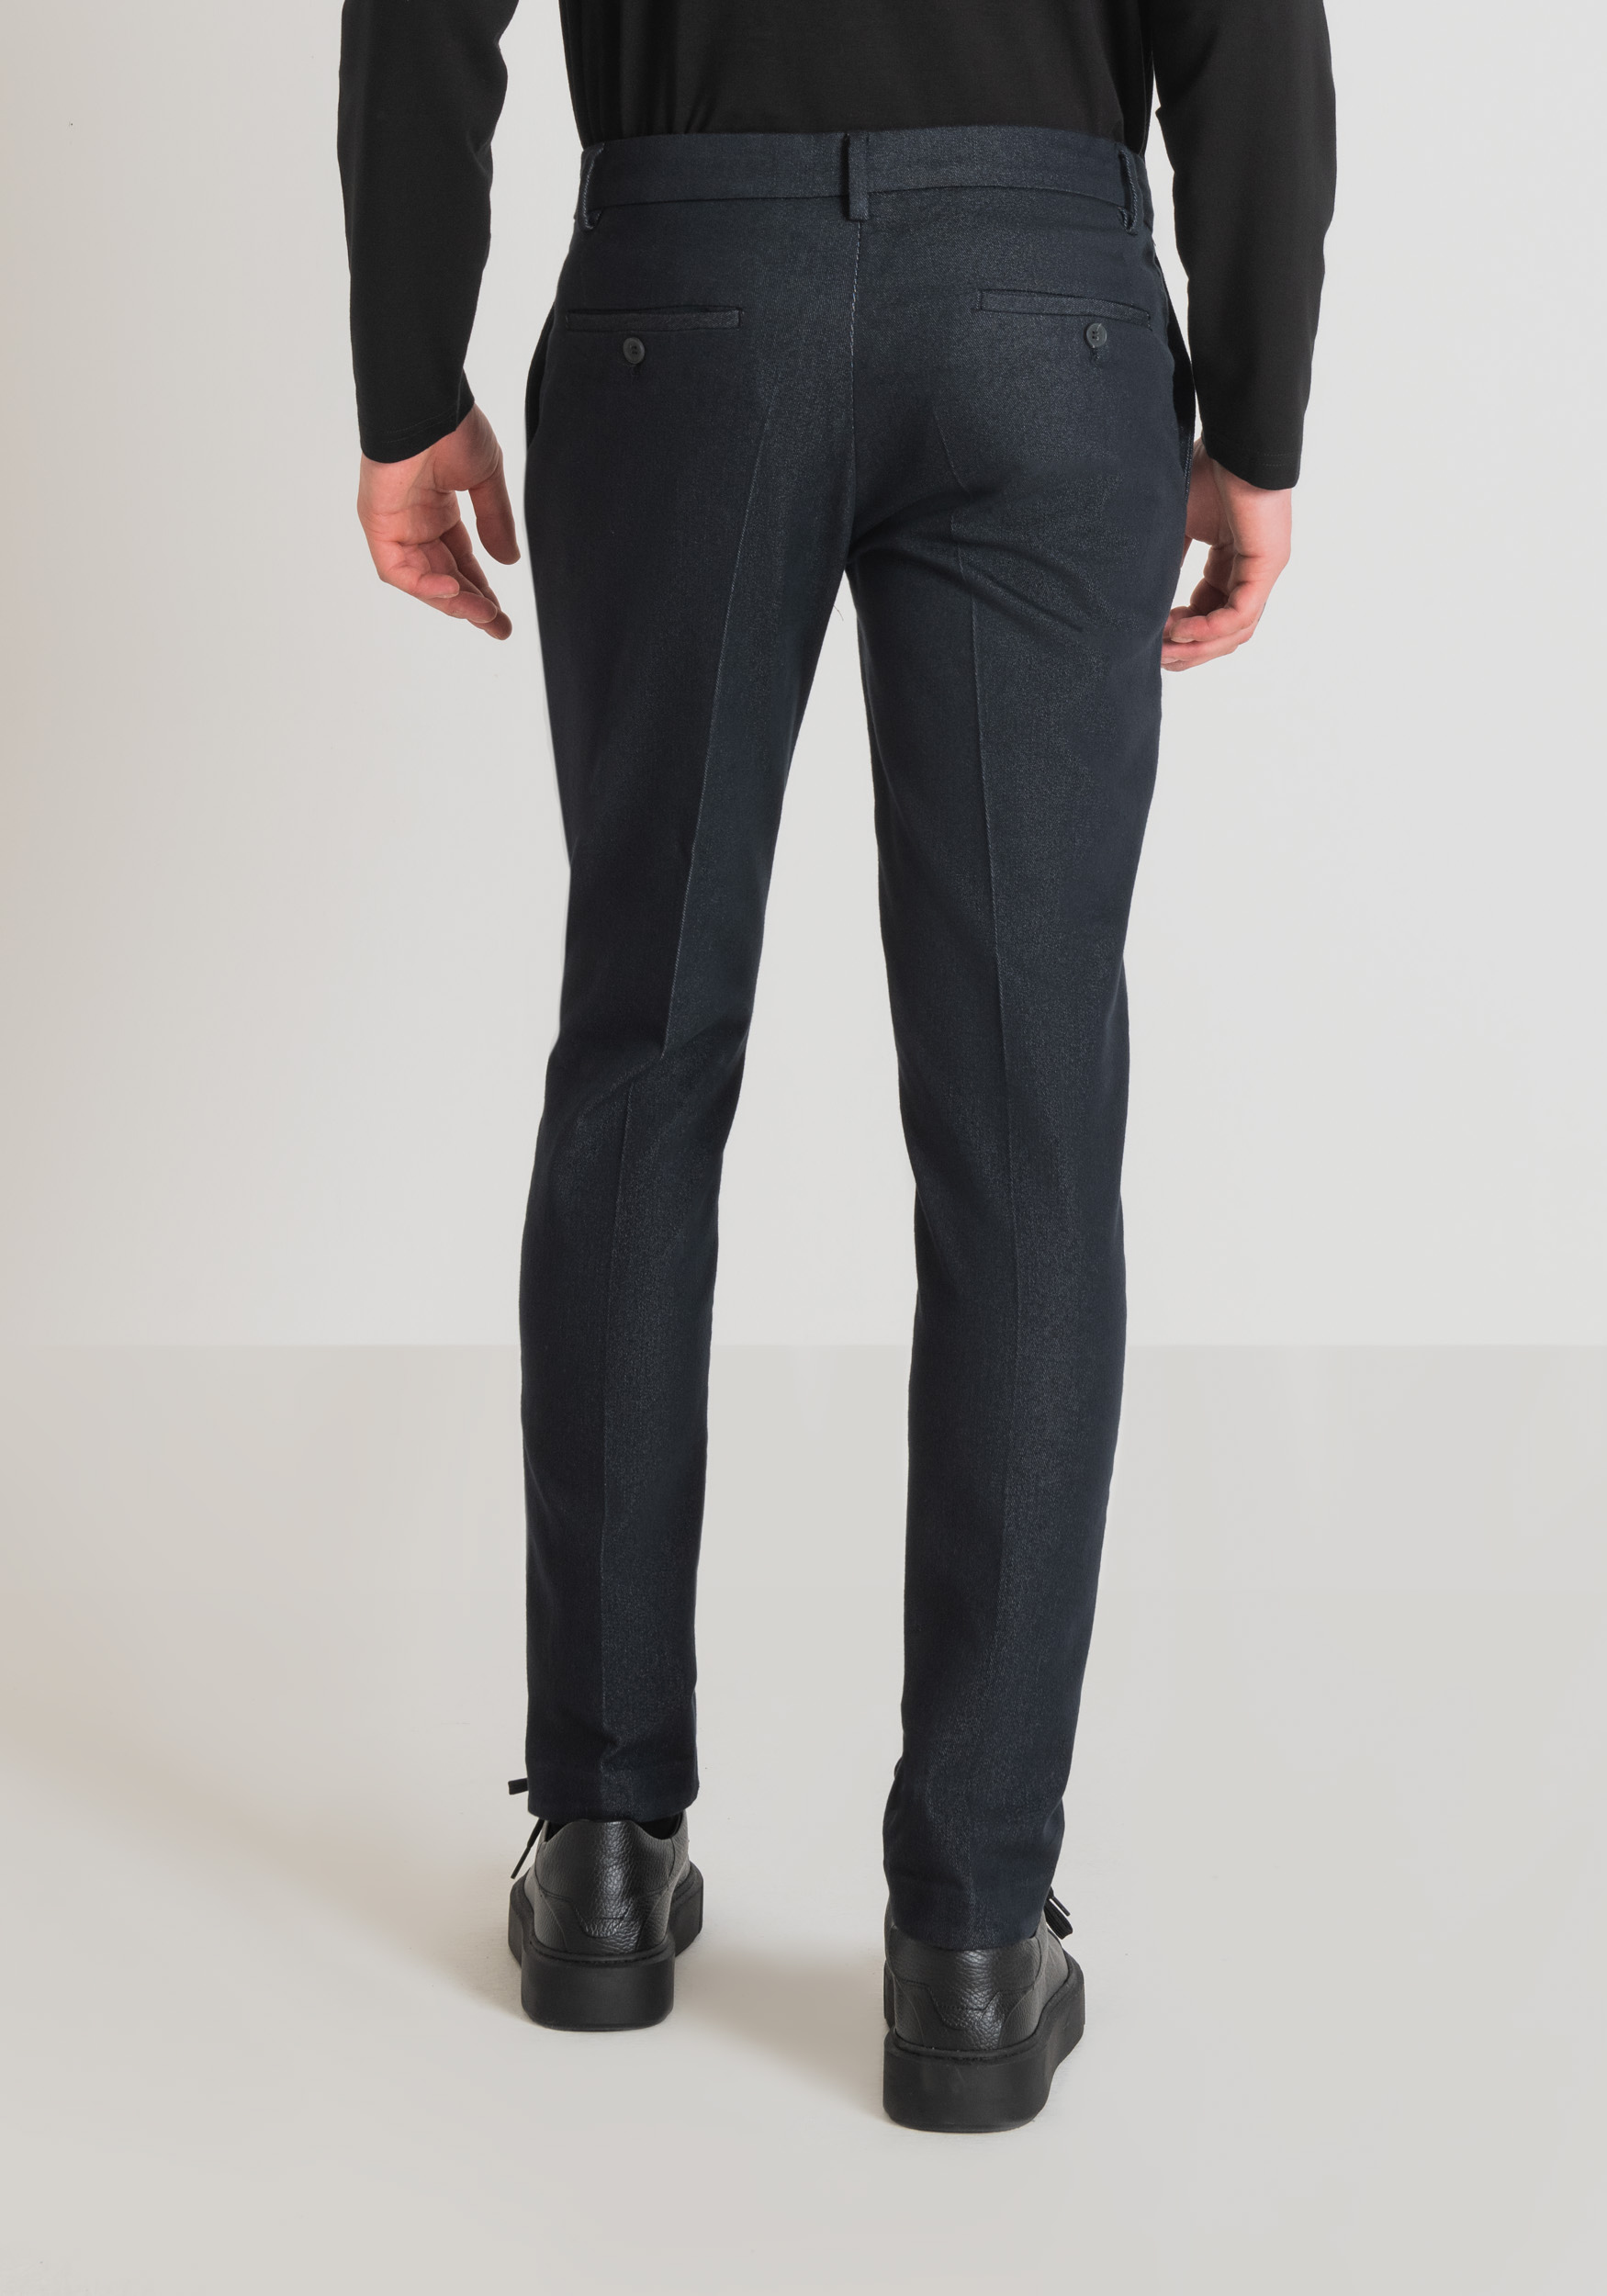 Antony Morato Pantalon Skinny 'Bryan' En Denim Extensible De Coton Melange Bleu Denim | Homme Pantalons